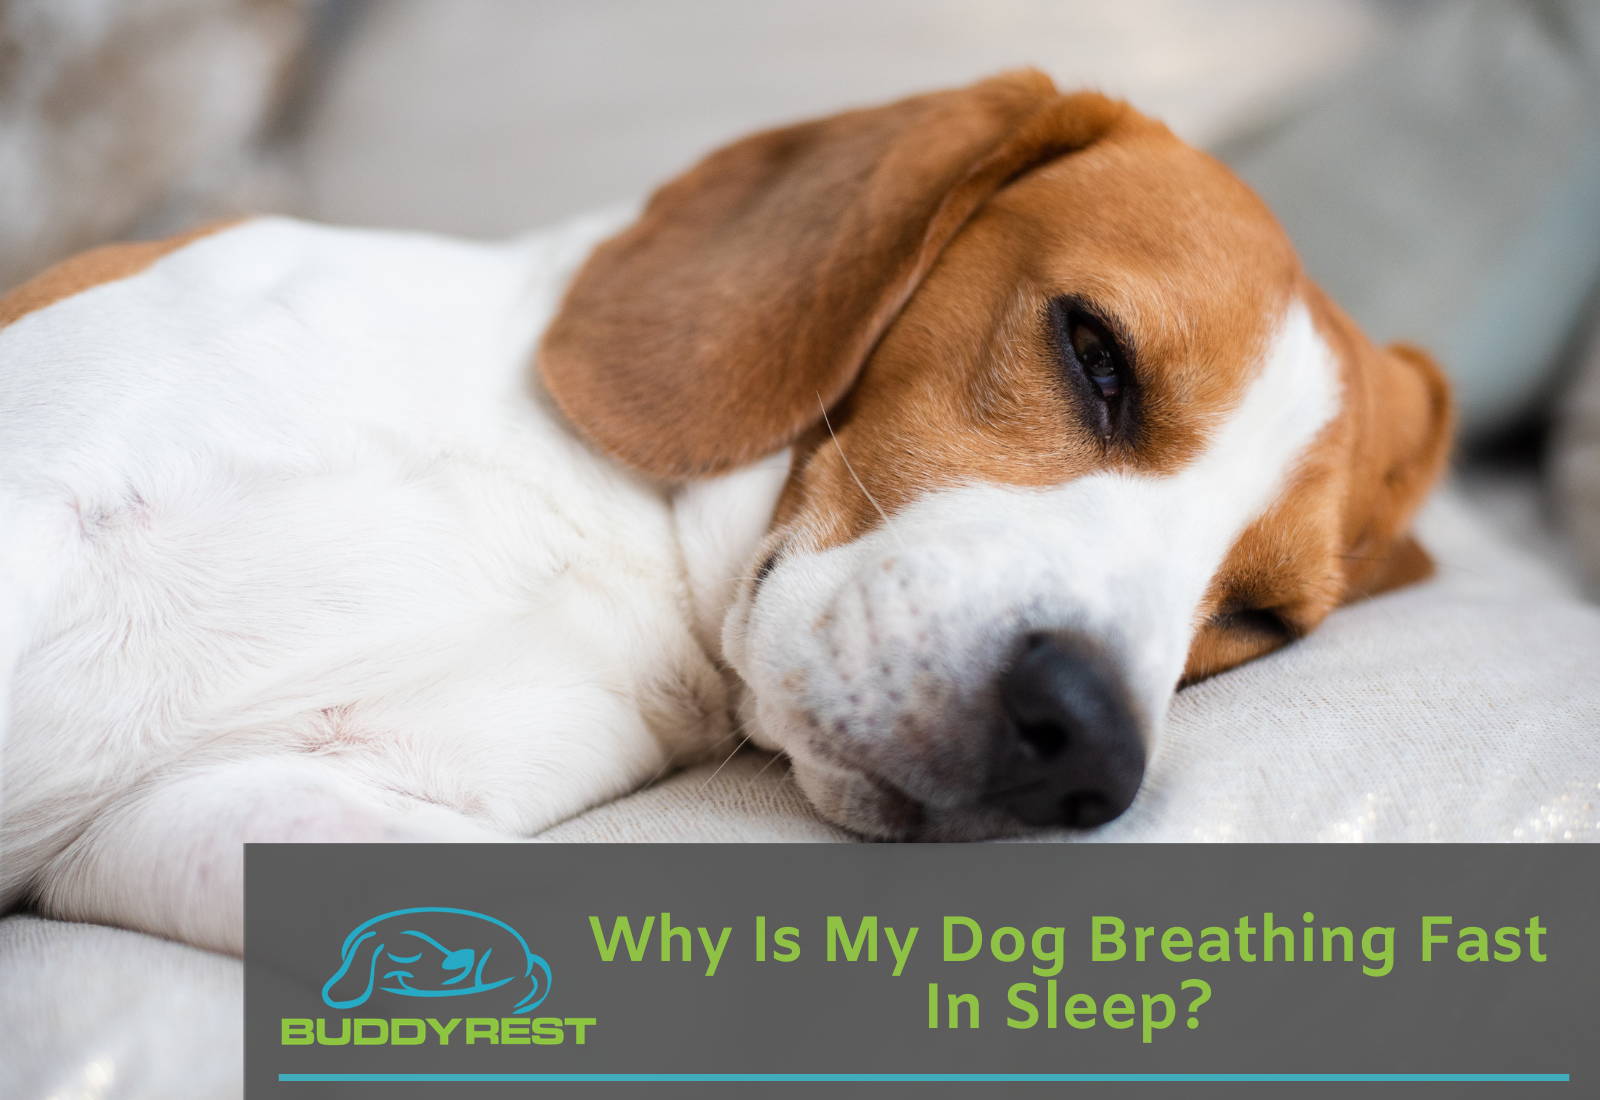 Why is my dog breathing fast in sleep?